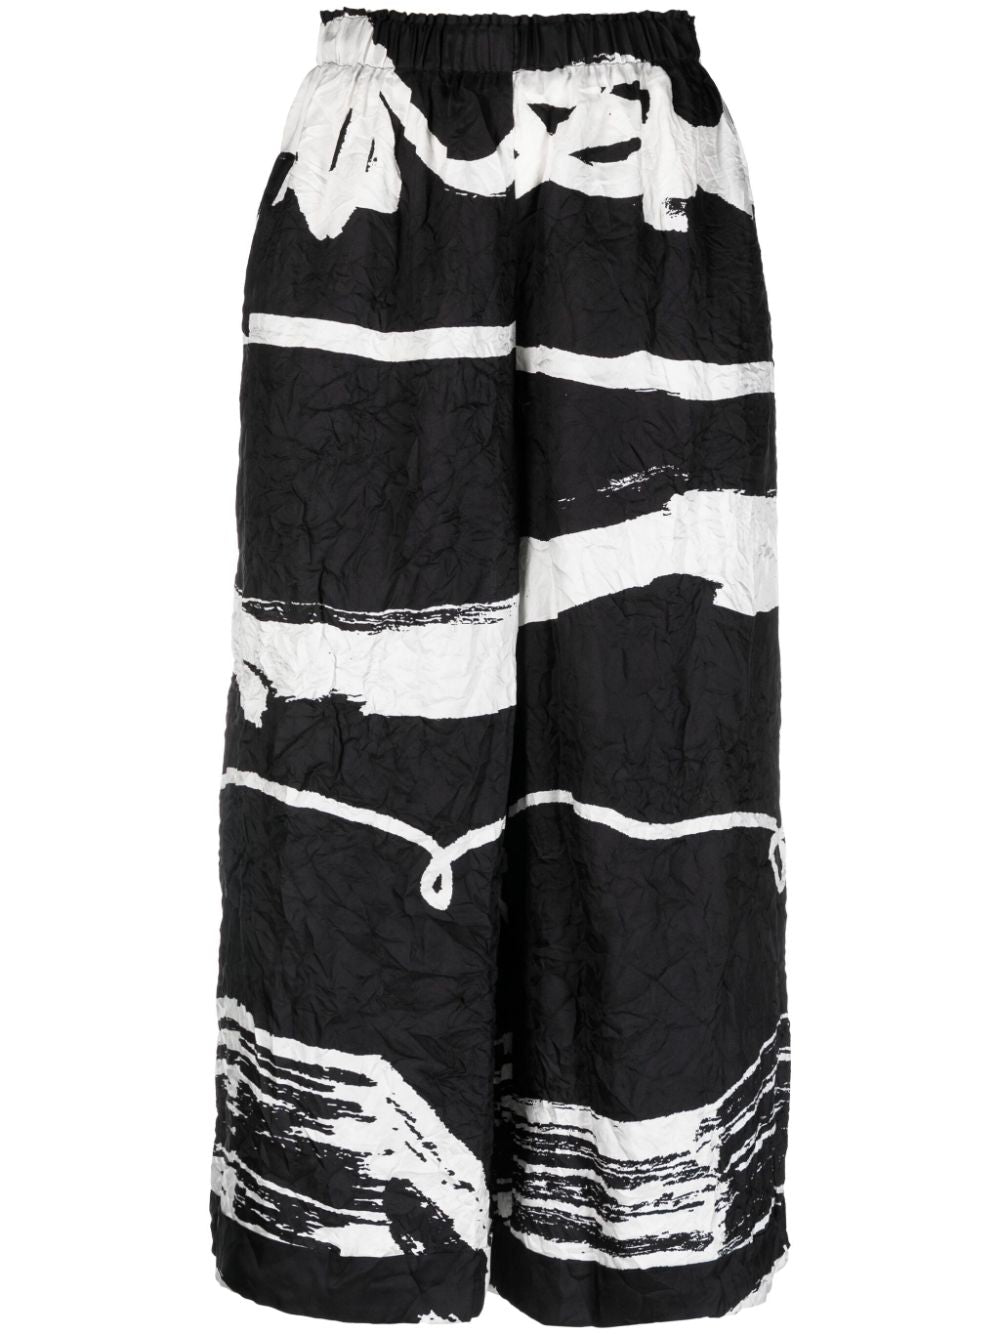 DANIELA GREGIS Printed Silk Wide Leg Trousers for Women - Black Abstract Print, Crinkled Finish, Elastic Waistband, Cropped Cut